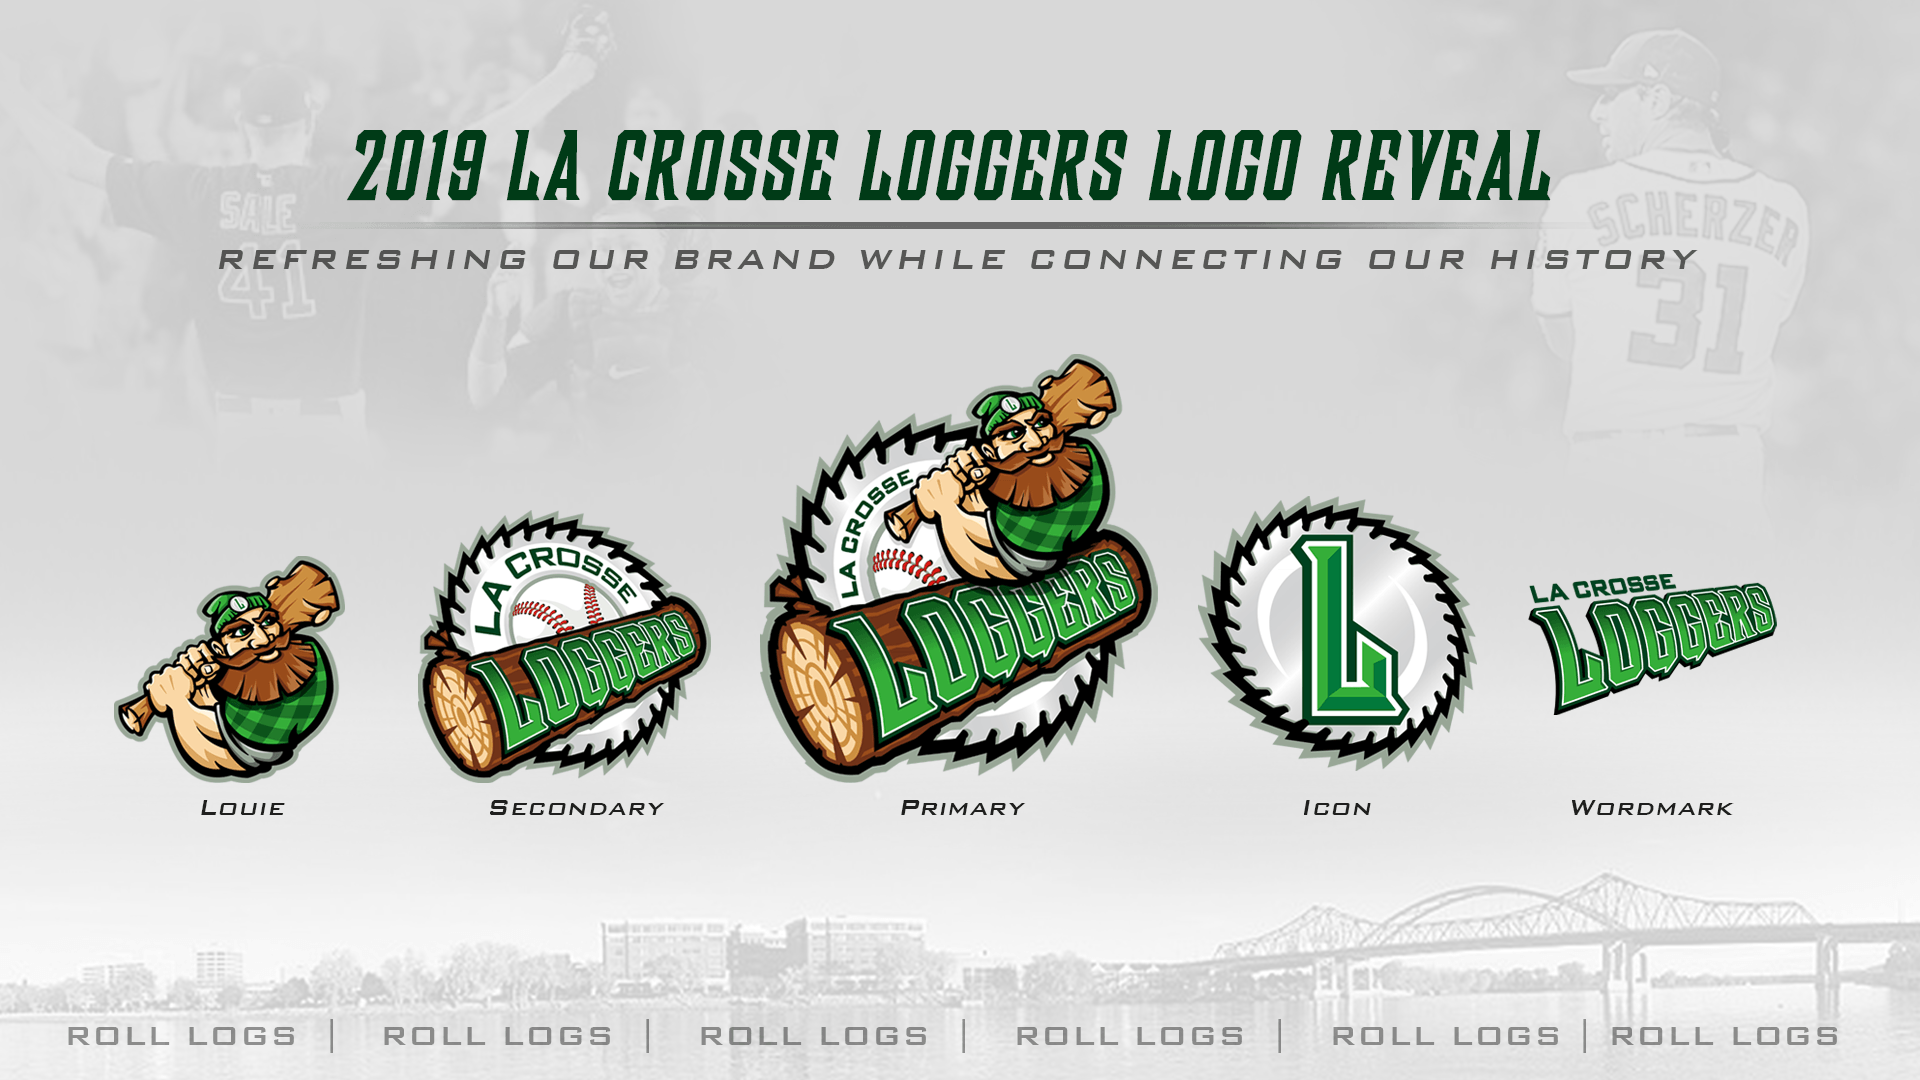 Loggers Logo - Loggers Refresh Logos for 2019 Season Crosse Loggers : La